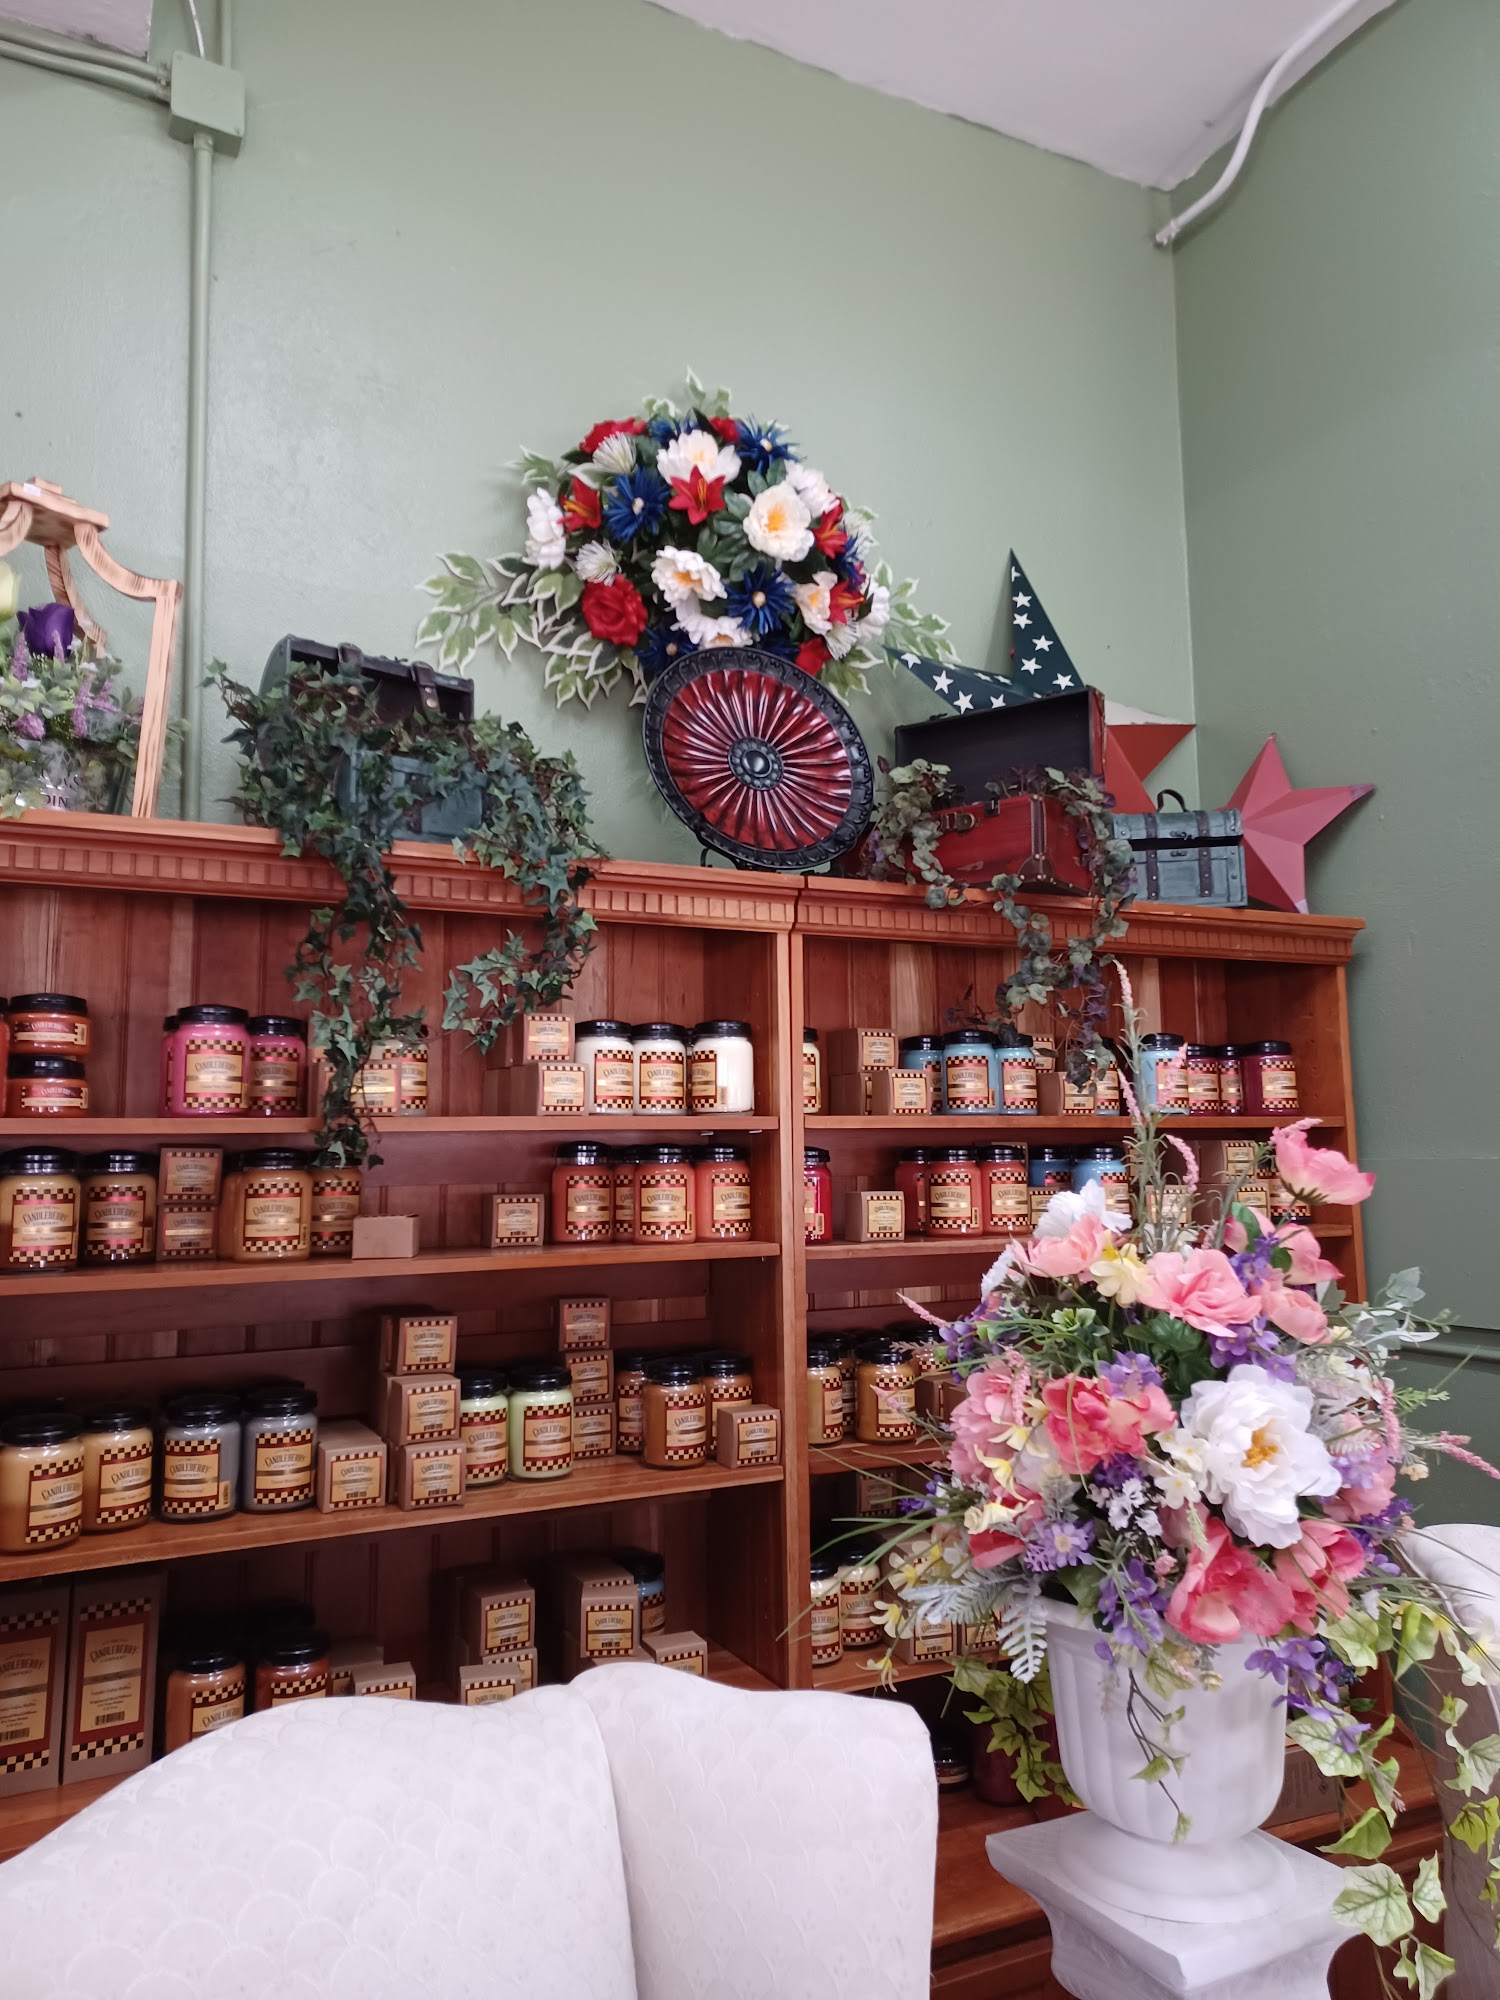 Heaven-Scent Floral & Gifts 100 N Main Cross St, Louisa Kentucky 41230